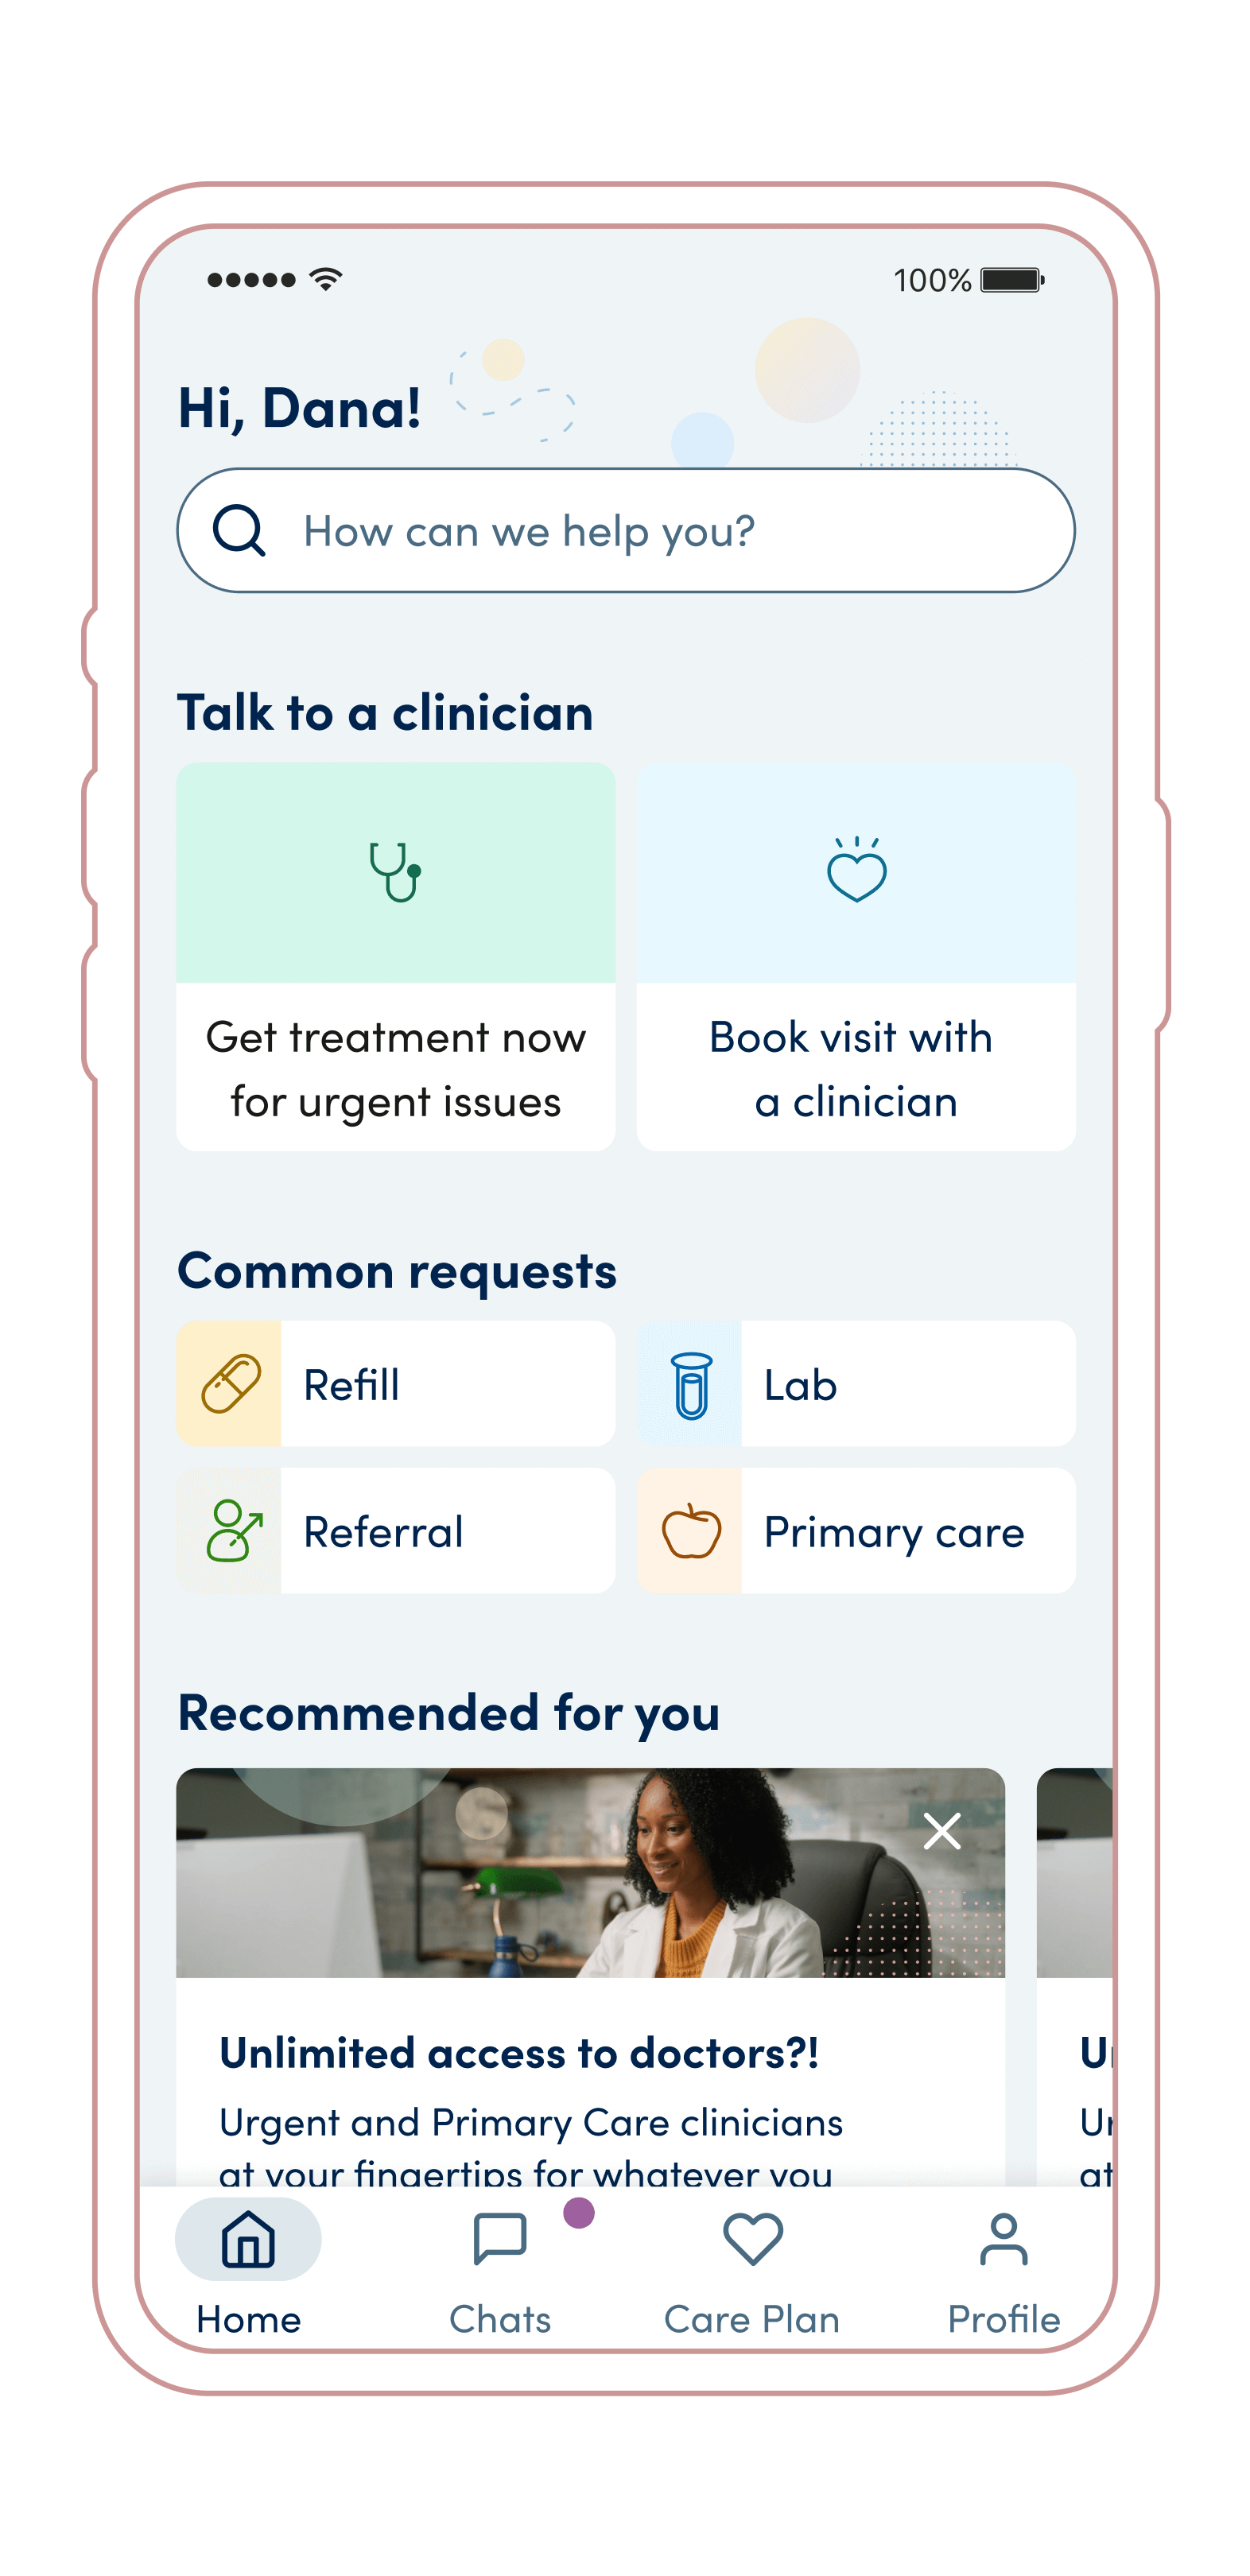 Member Home screen in the K Health app